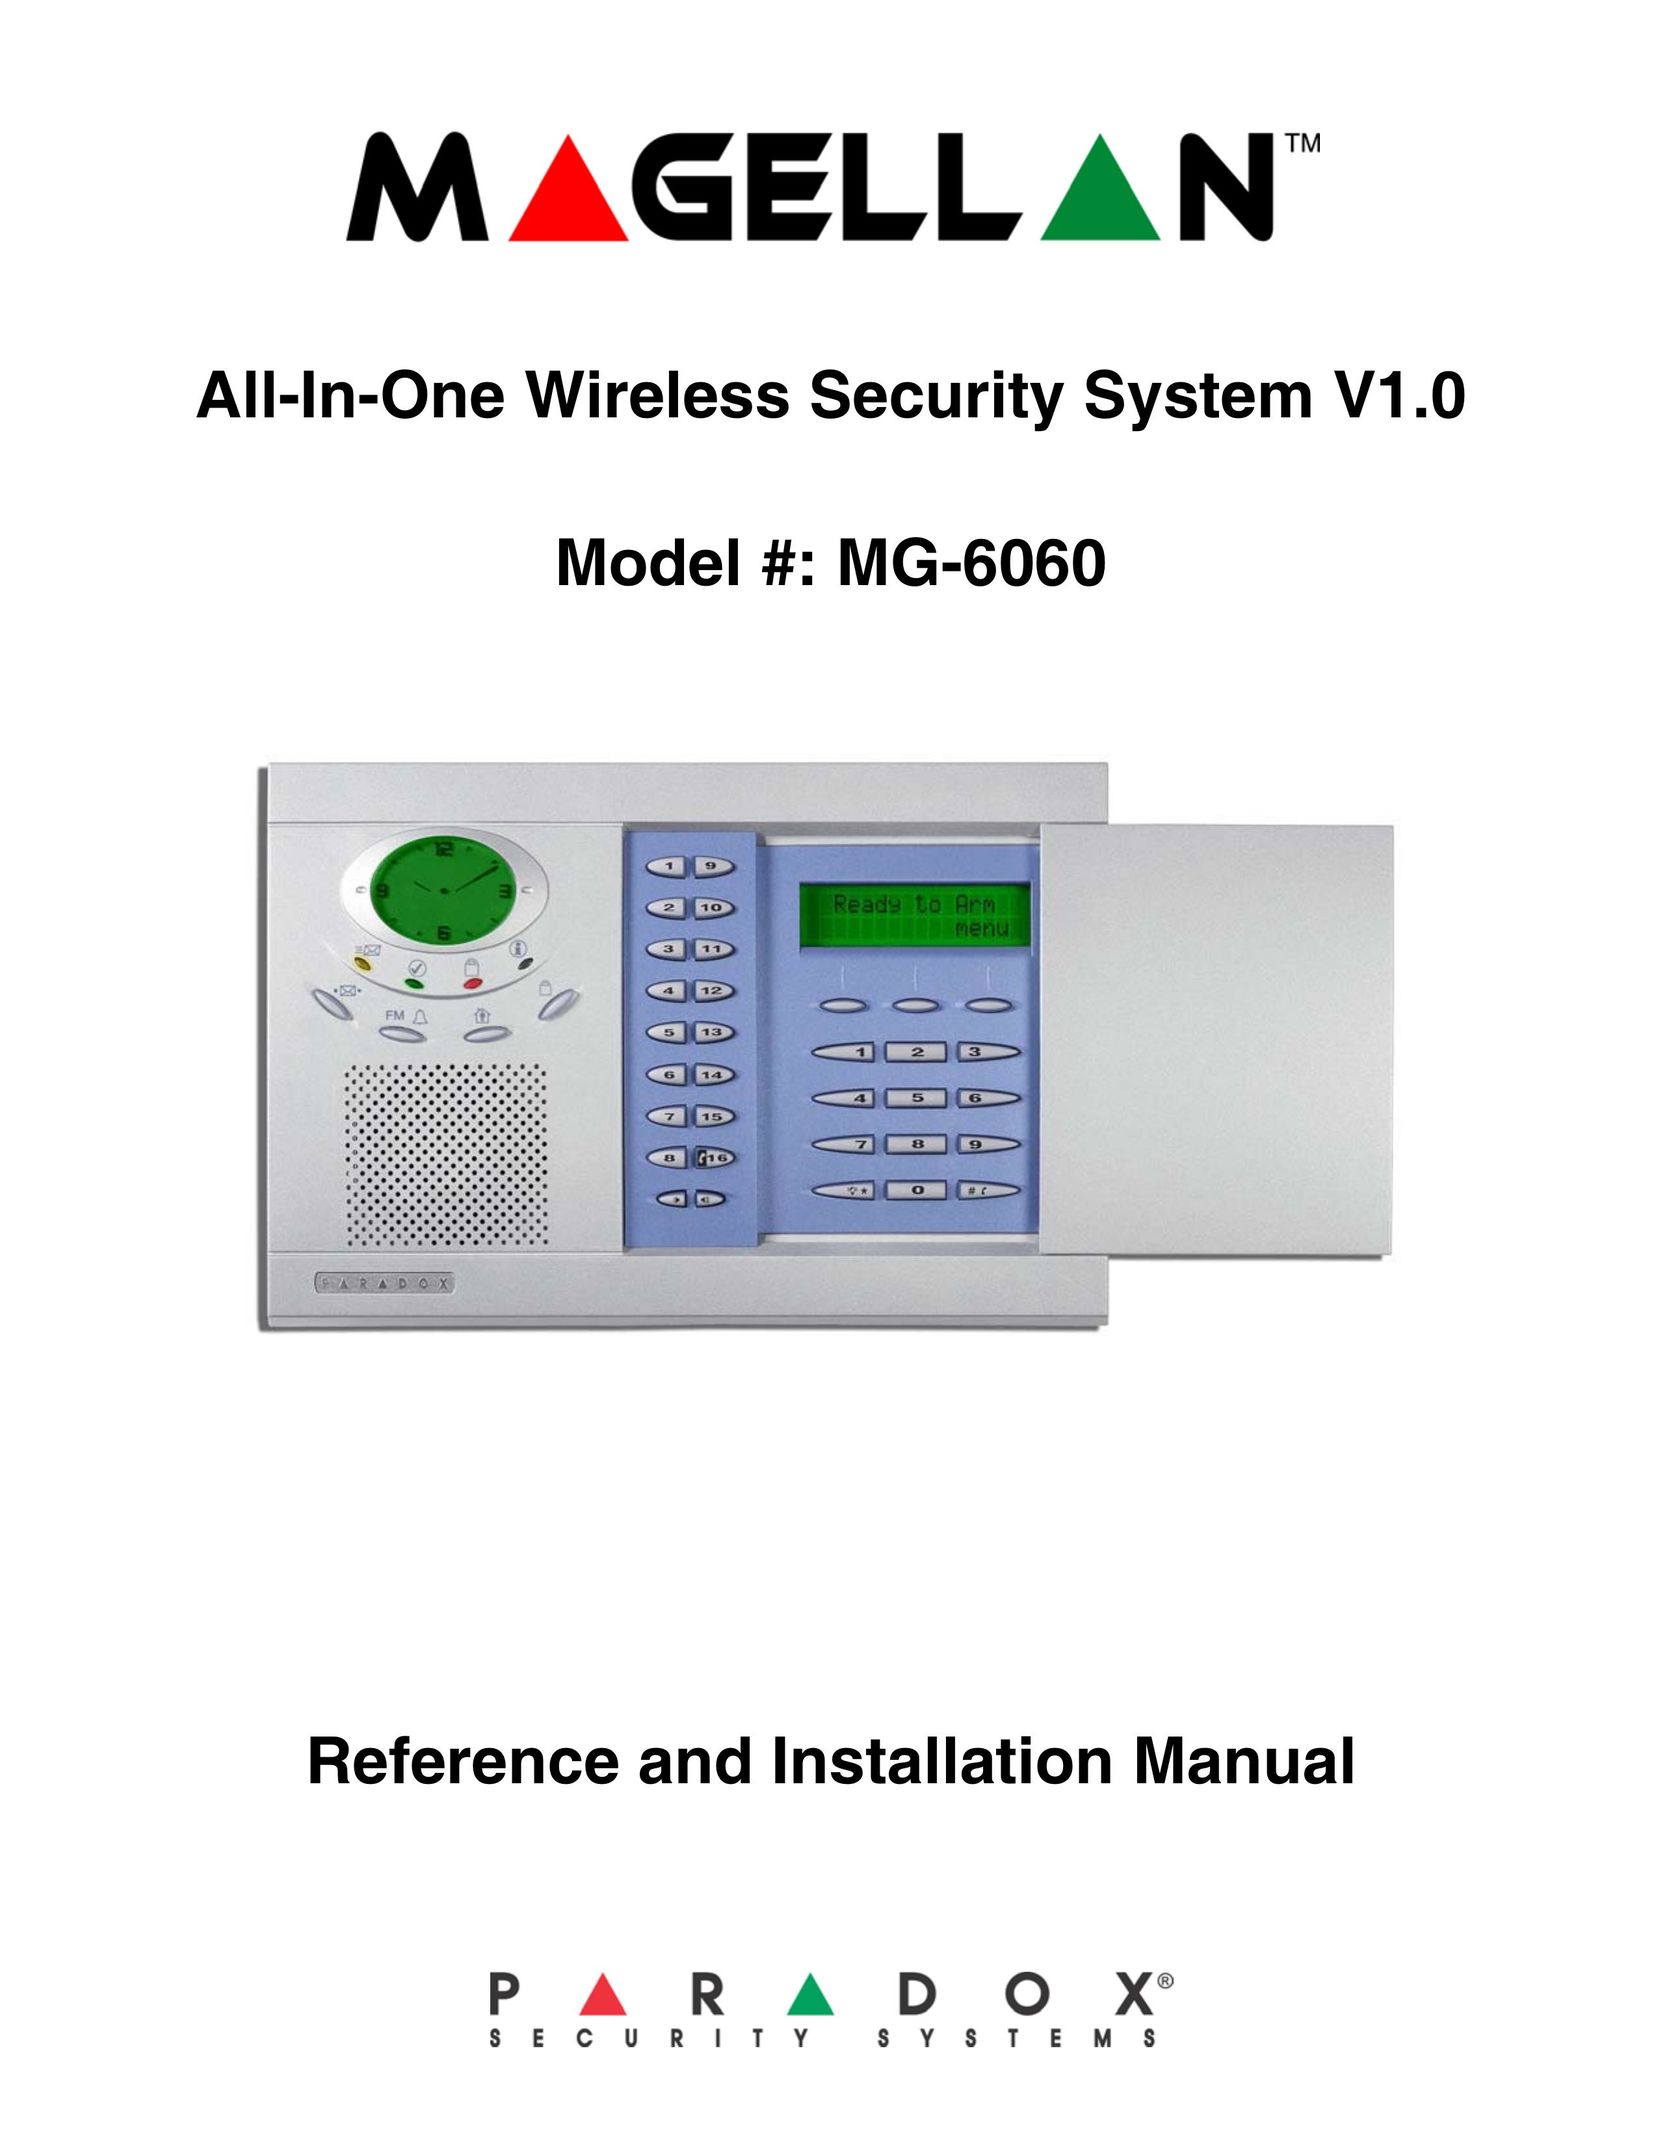 Magellan MG-6060 Home Security System User Manual